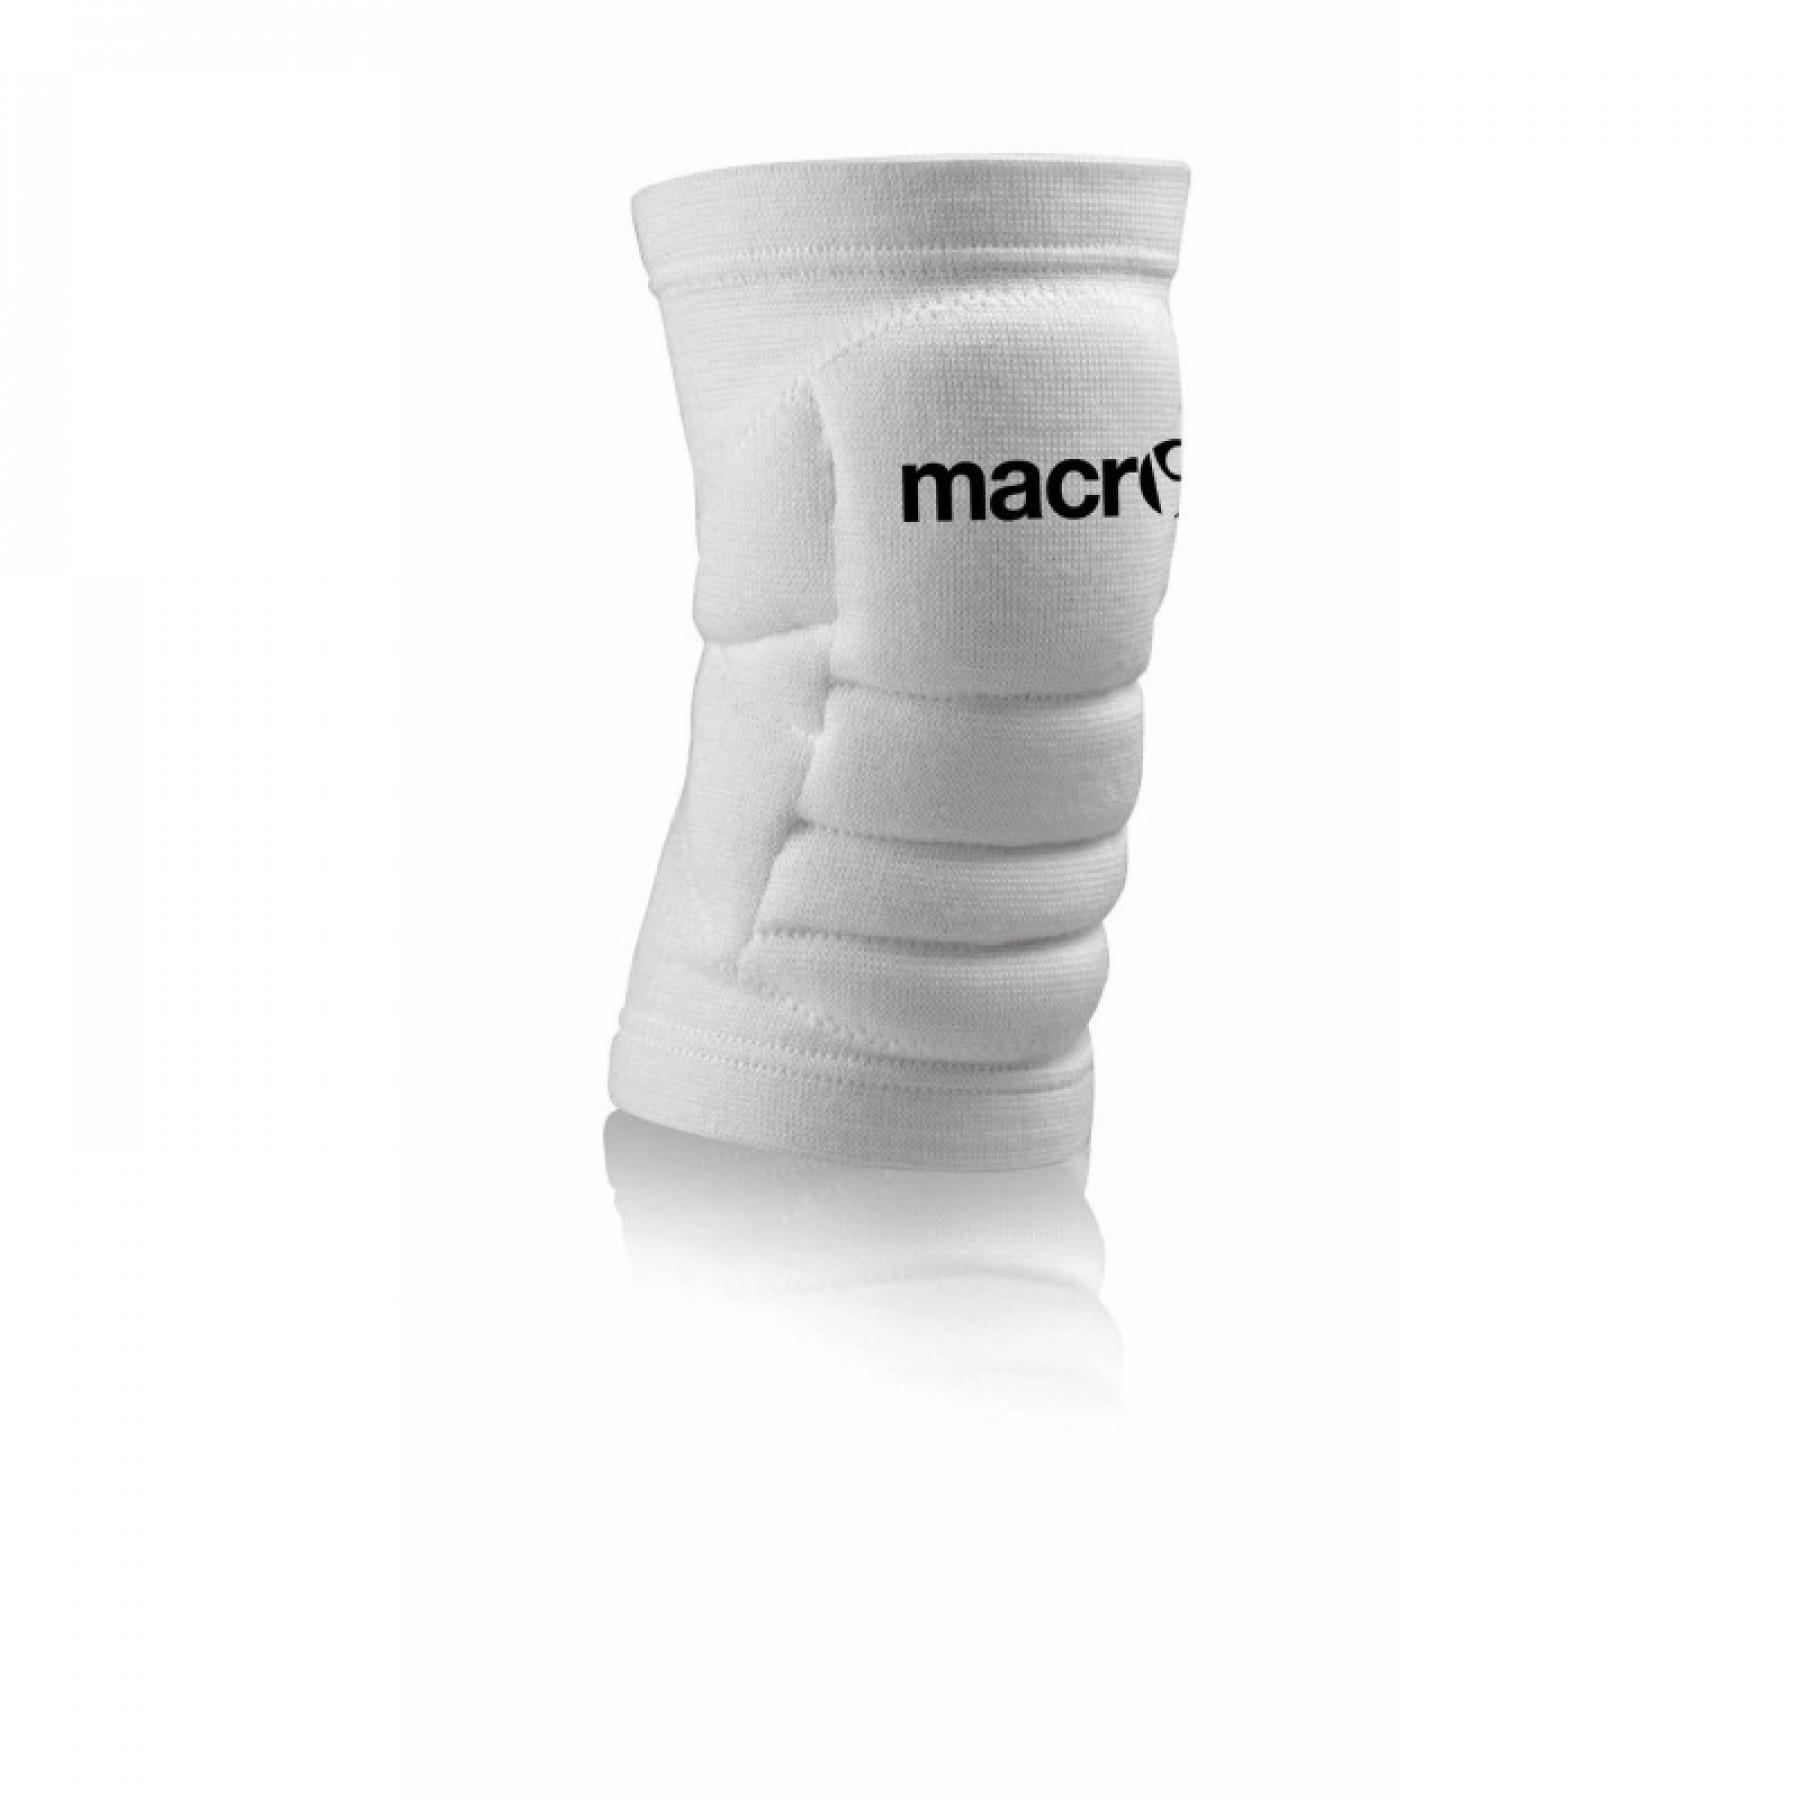 Set of 3 pairs of knee pads Macron Thyme